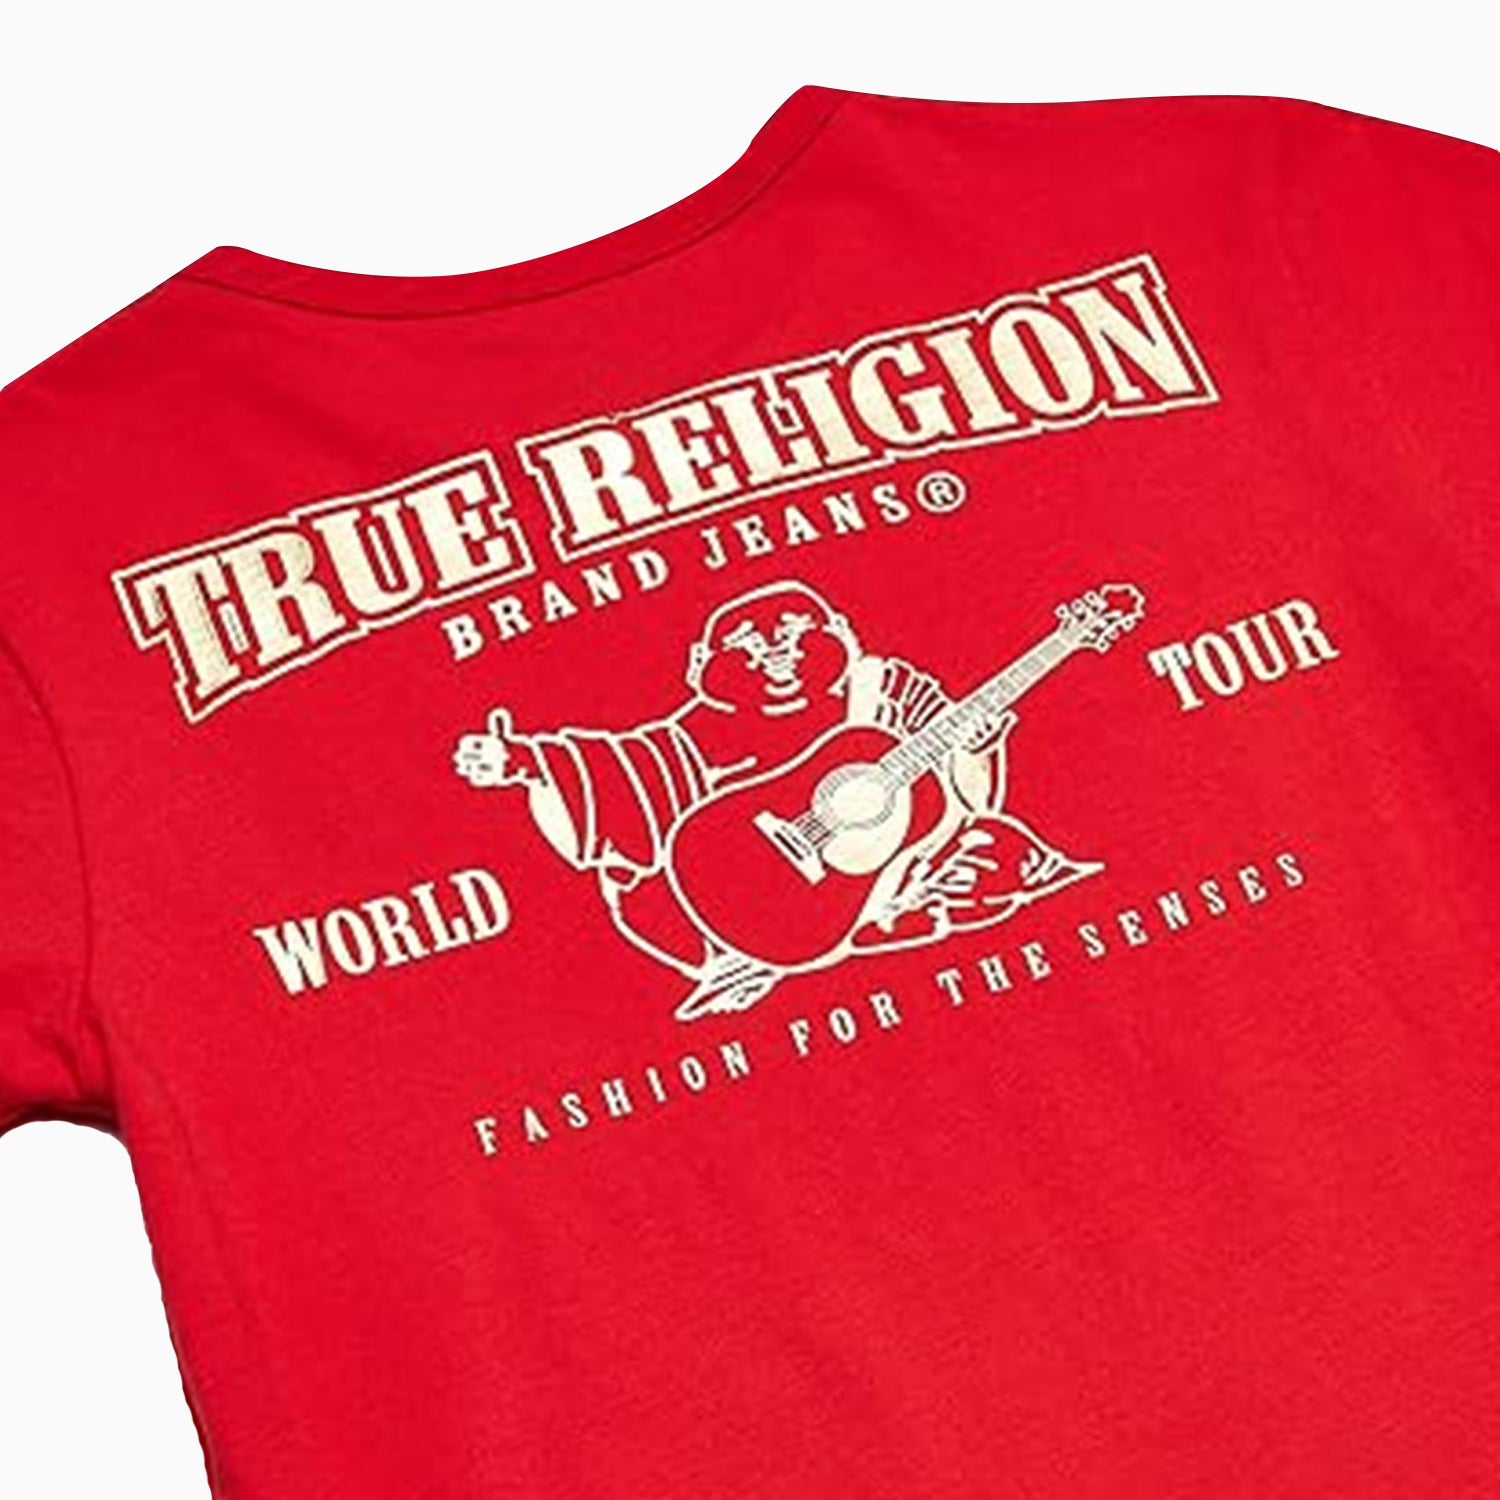 true-religion-kids-gold-buddha-logo-short-sleeves-t-shirt-tr717te179-red-gld